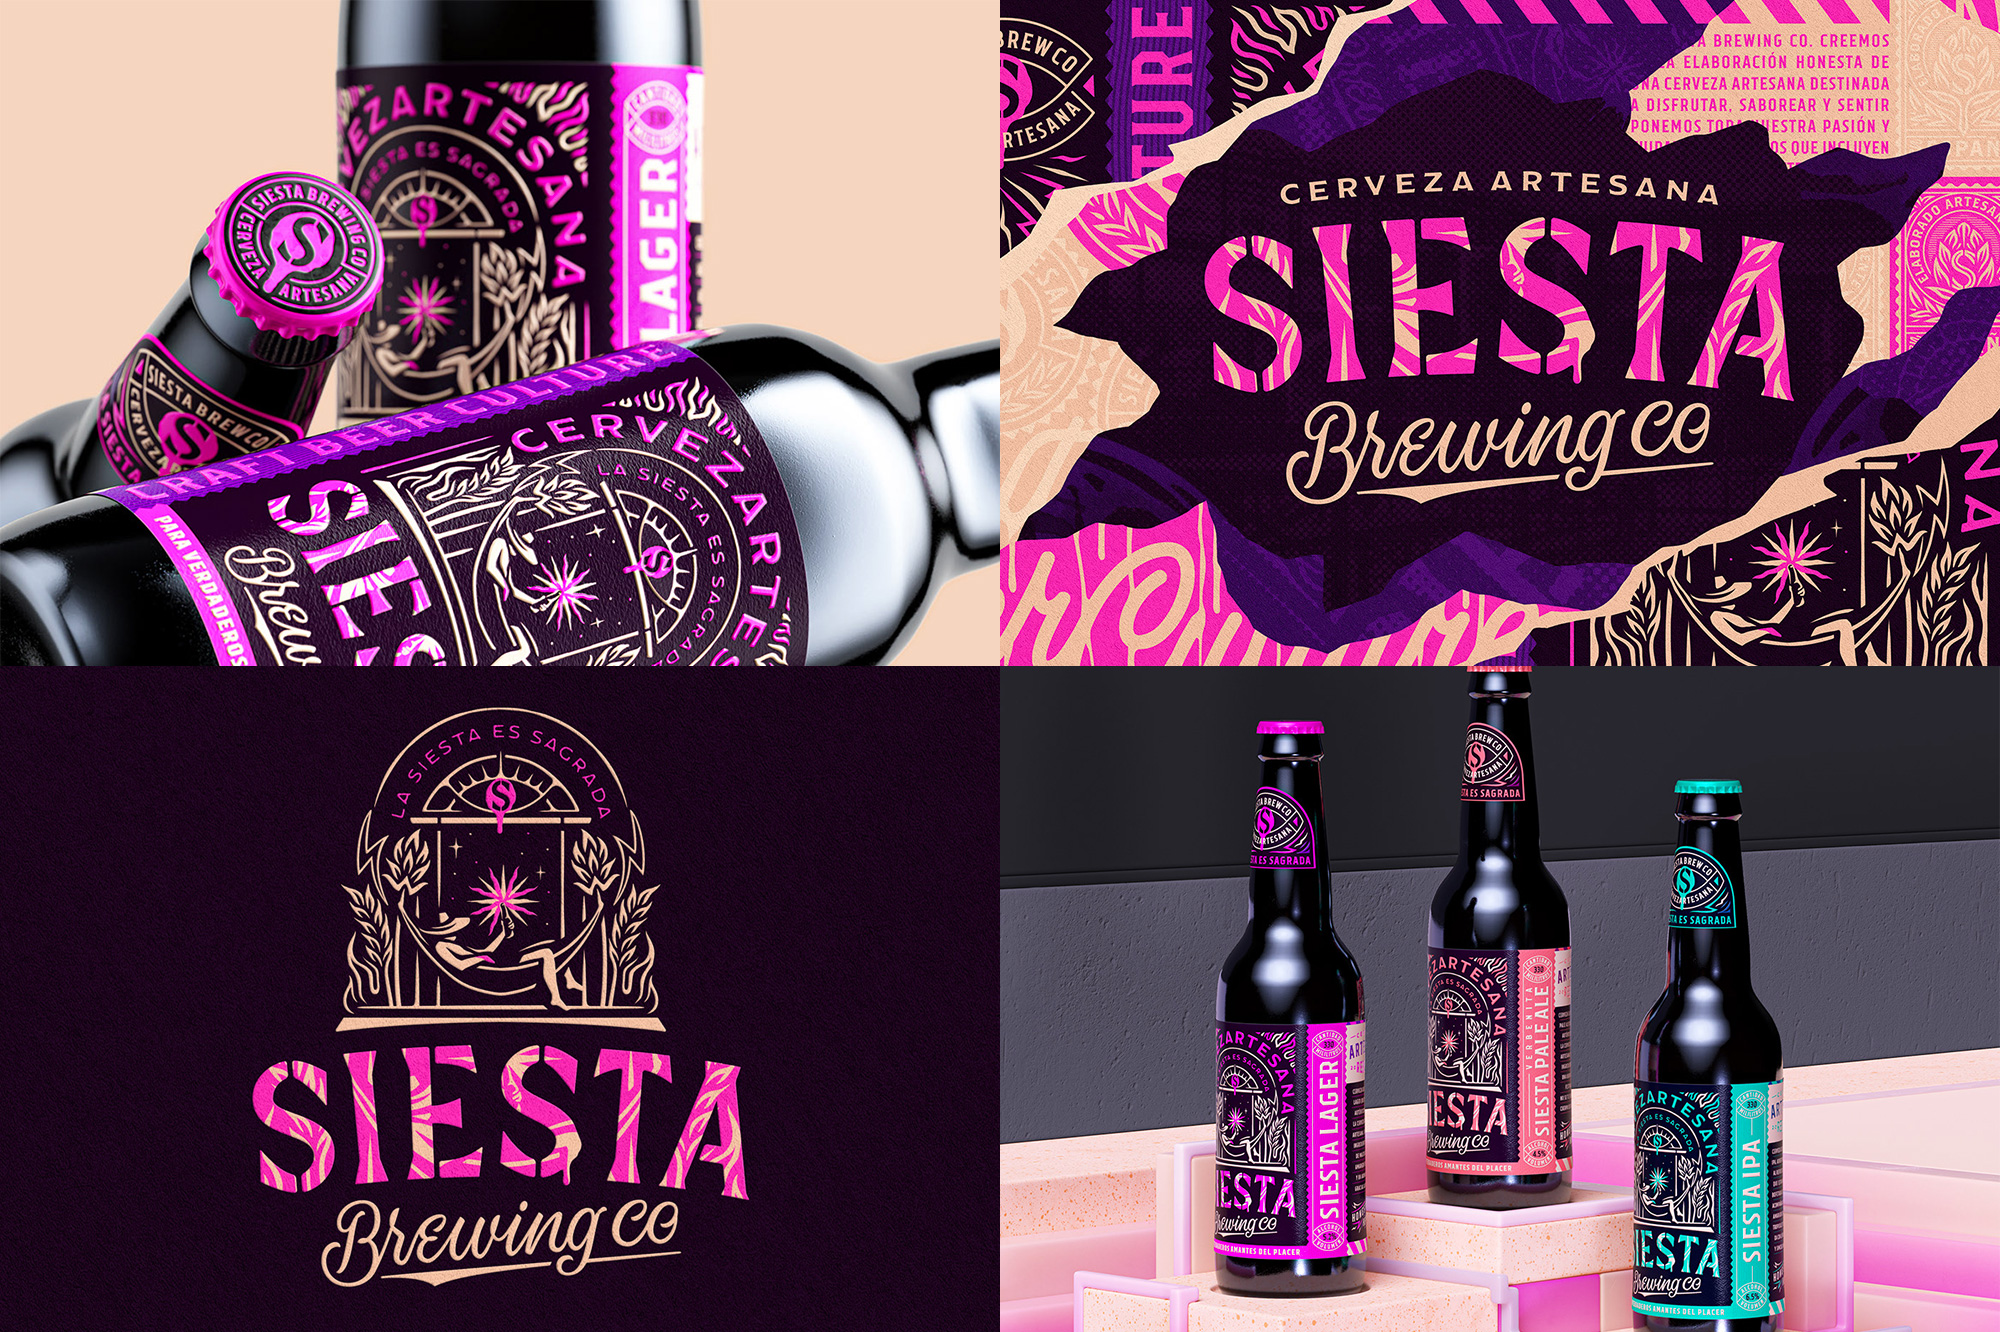 Siesta Brewing Co by Luis Utrillas